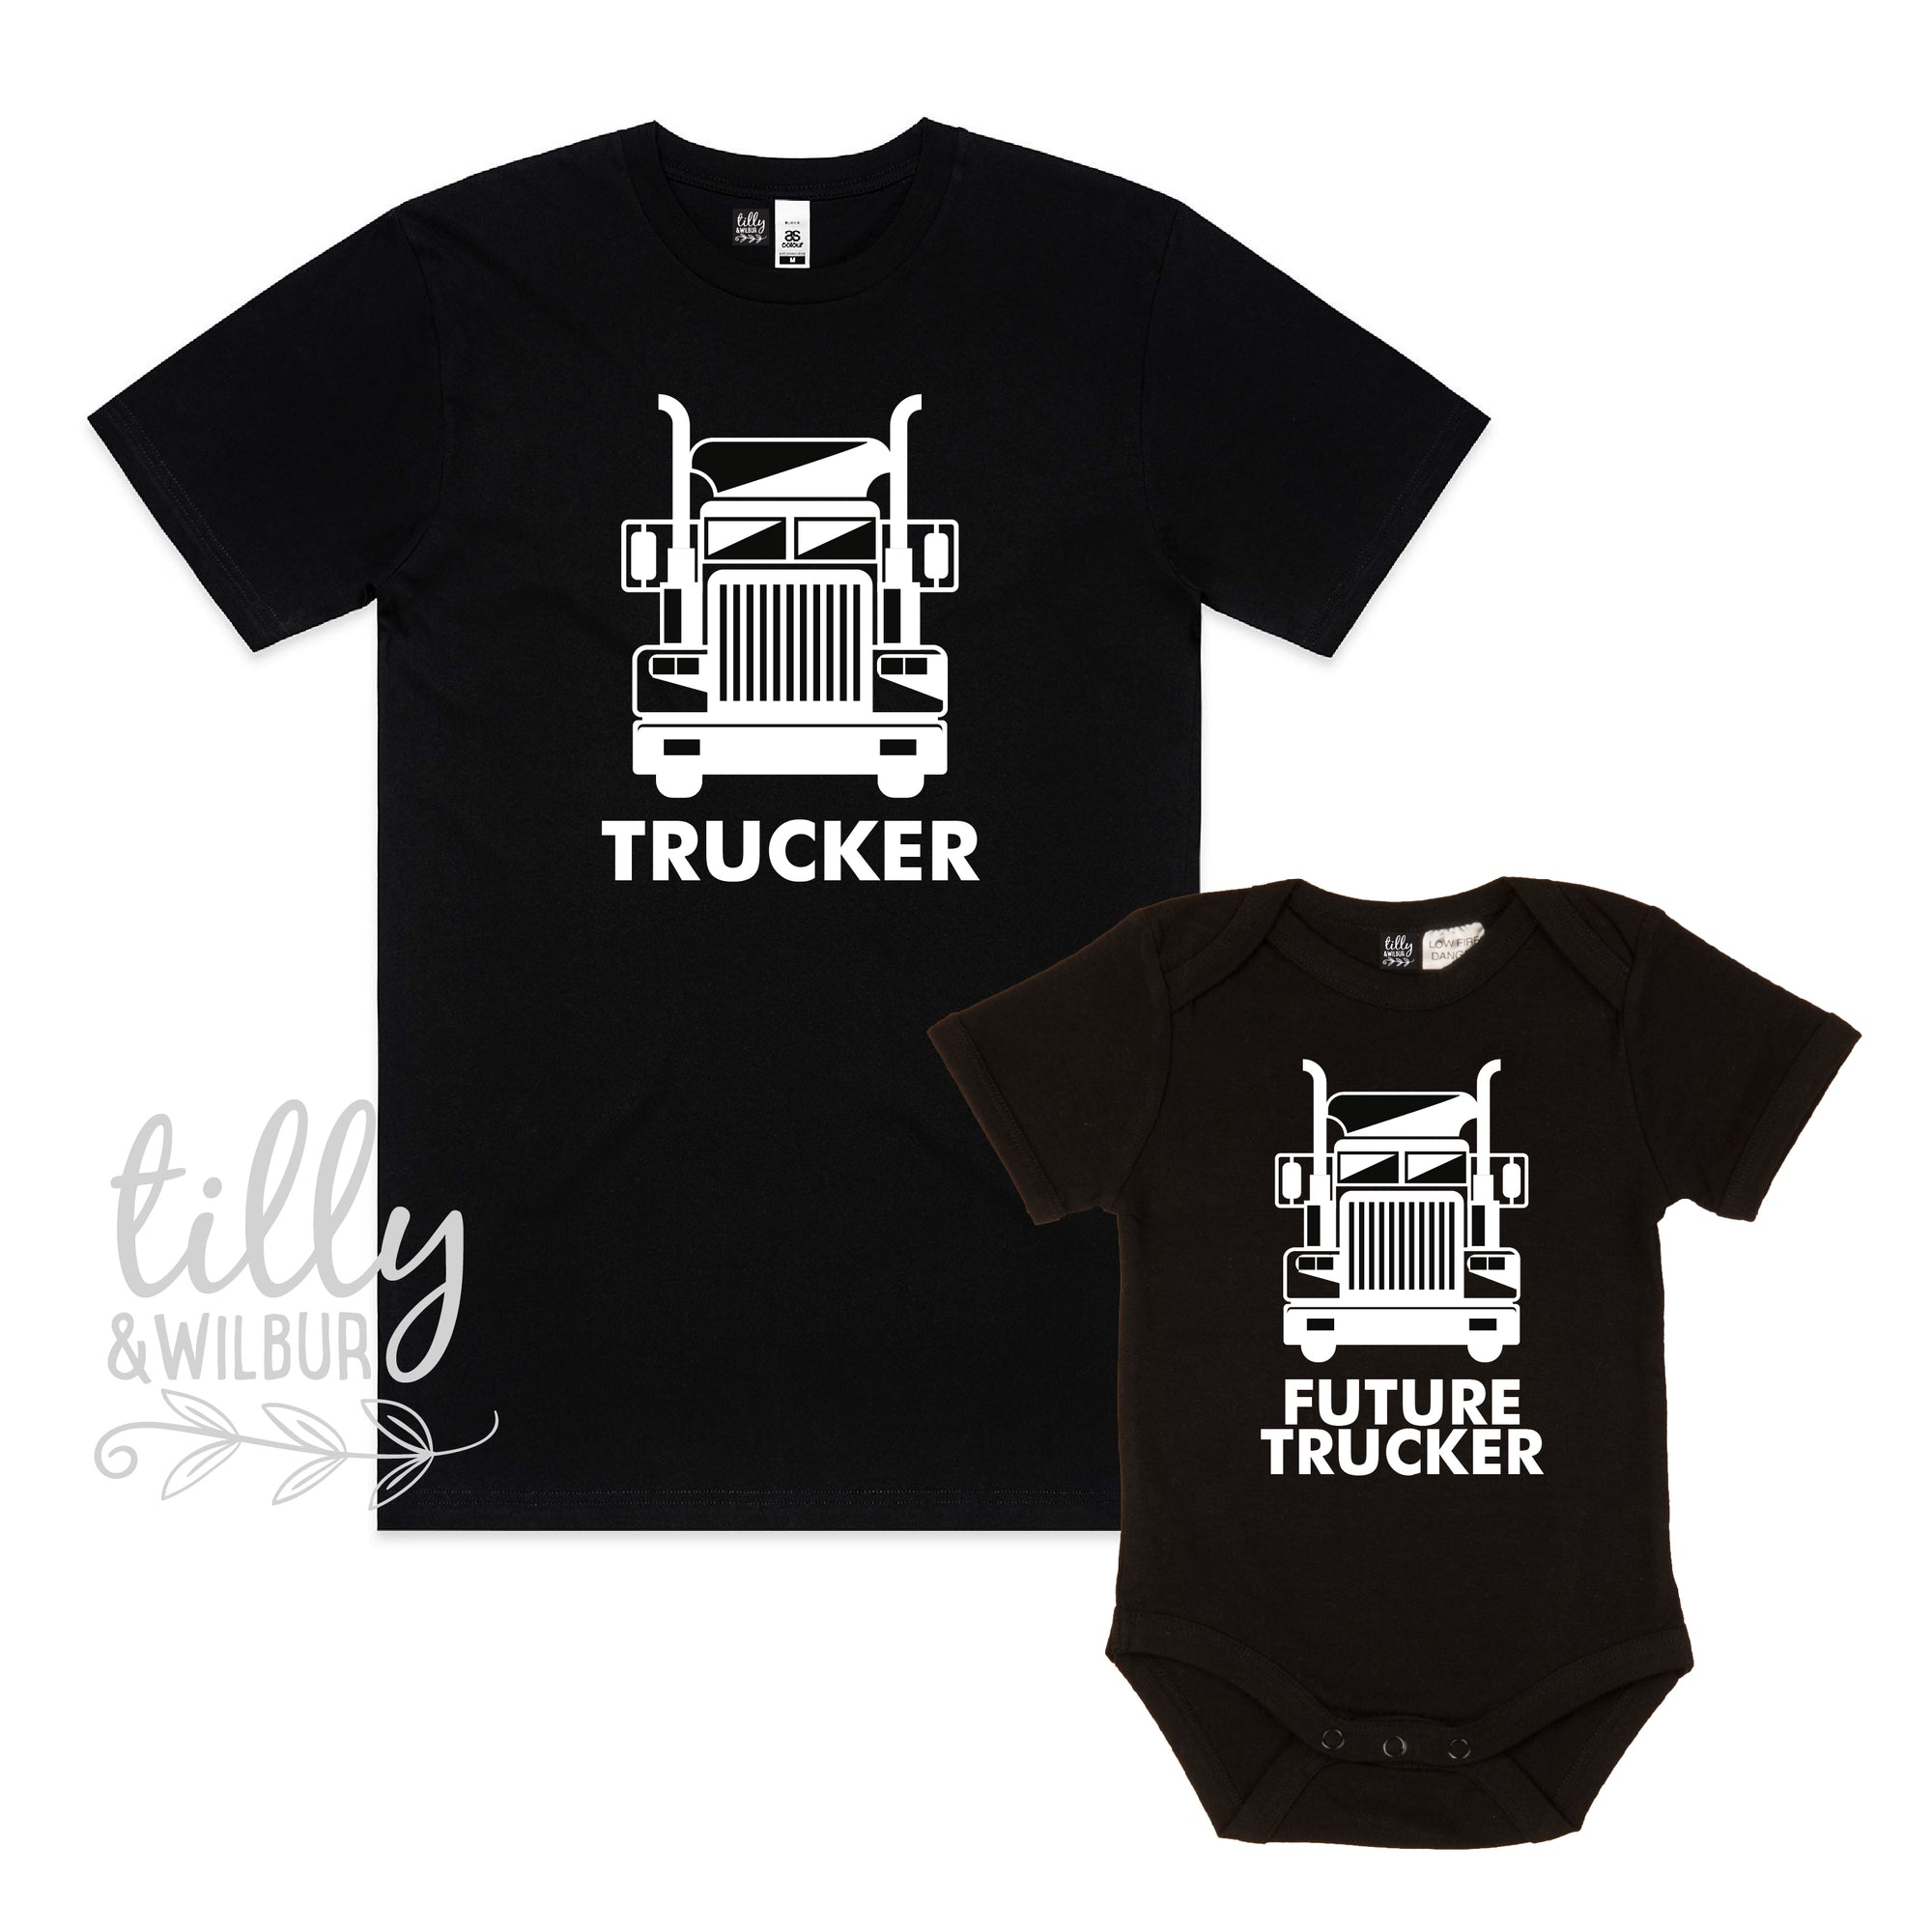 Trucker & Trucker In The Making Matching Set